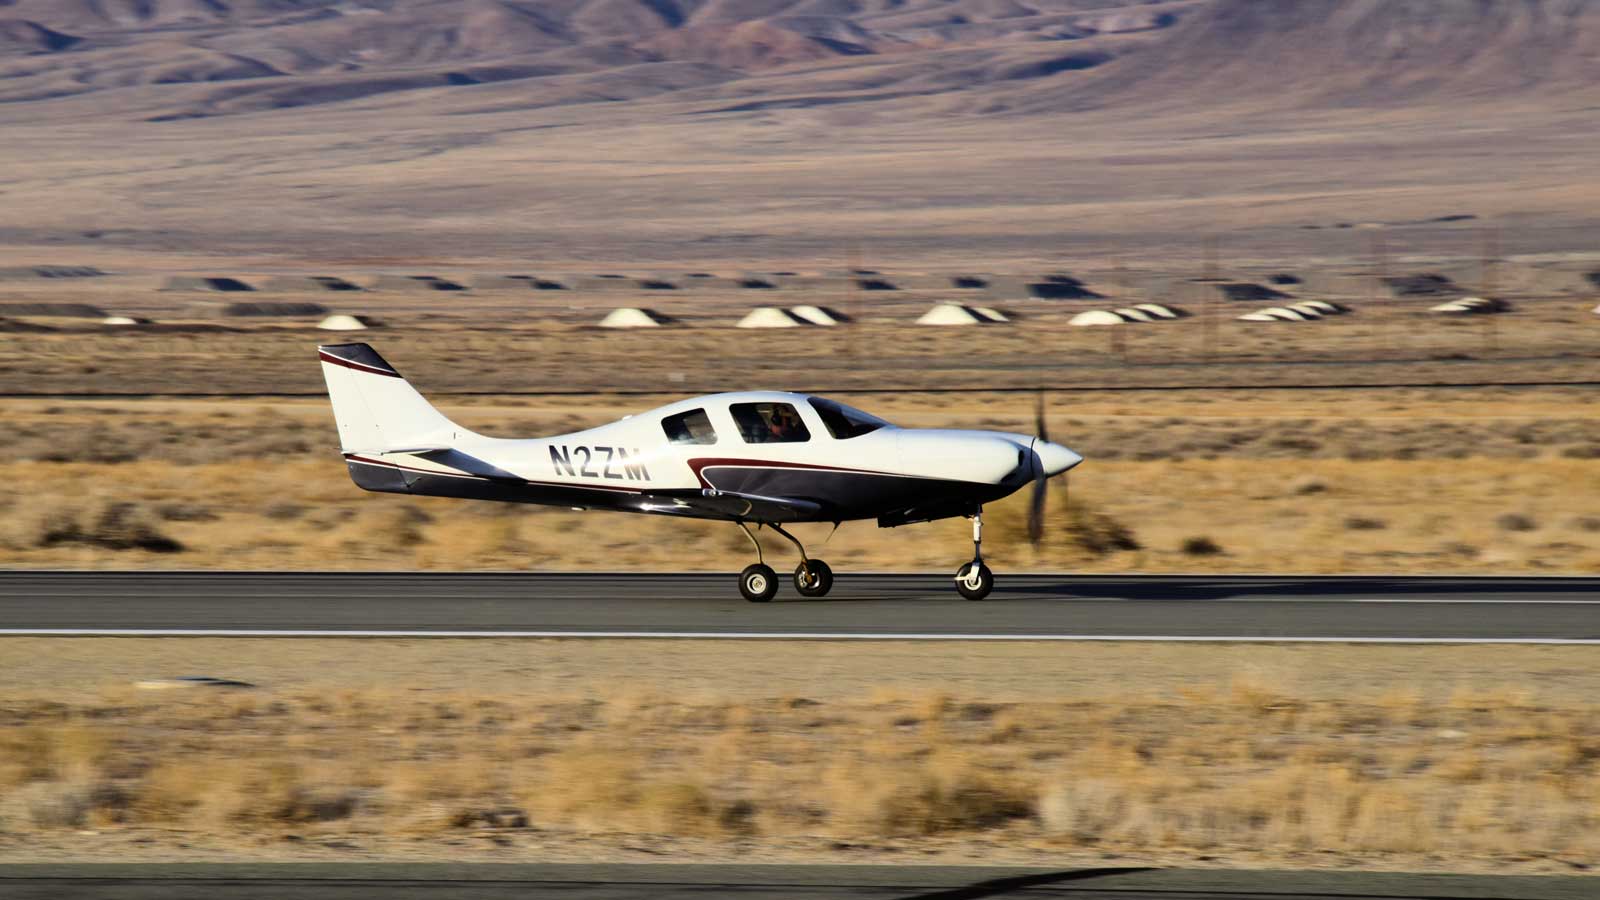 1997 Lancair IV-P – Pro-built by Greg McKenzie